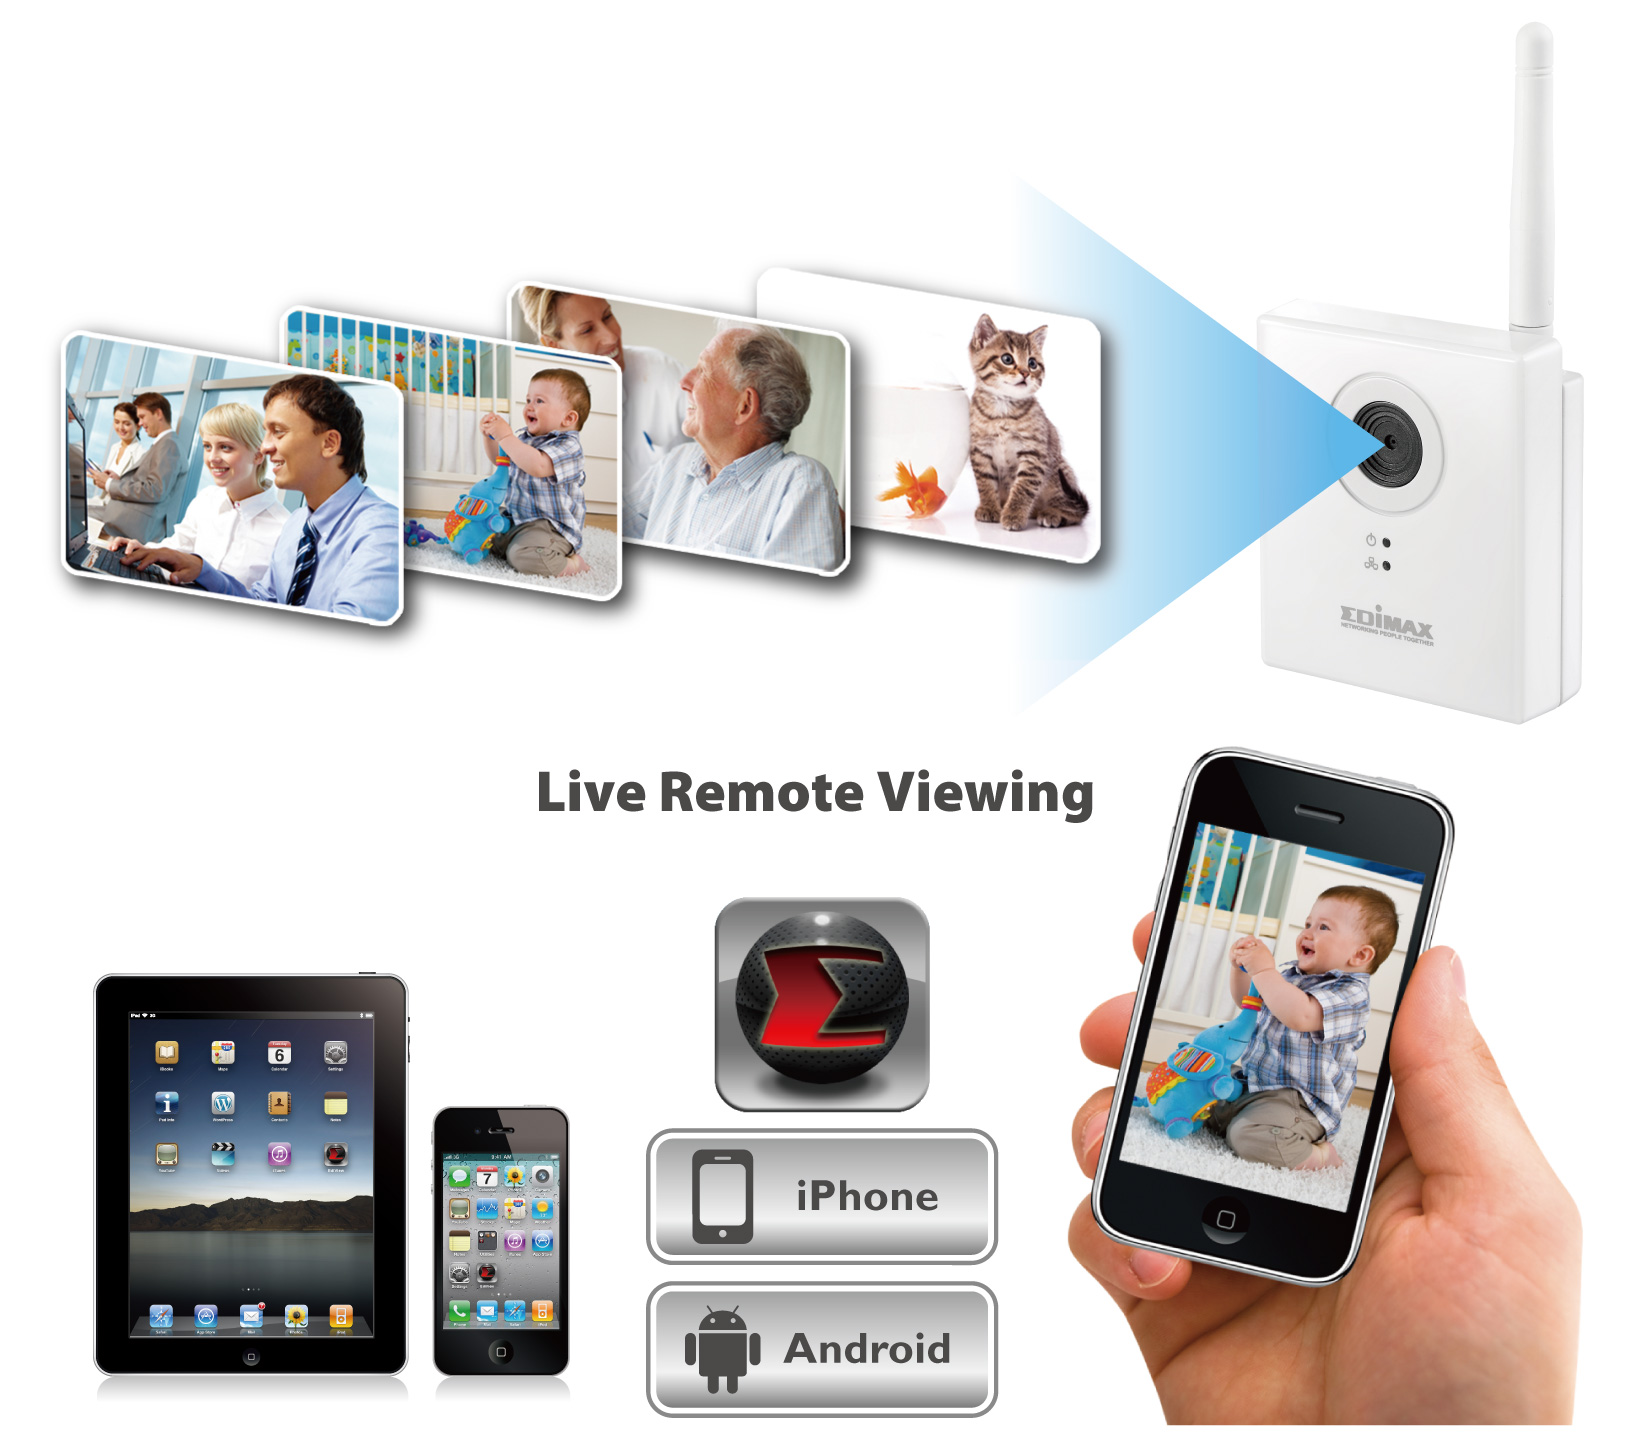 Edimax IC-3115W 1.3Mpx Wireless Network Camera, Live Remote Viewing Free App